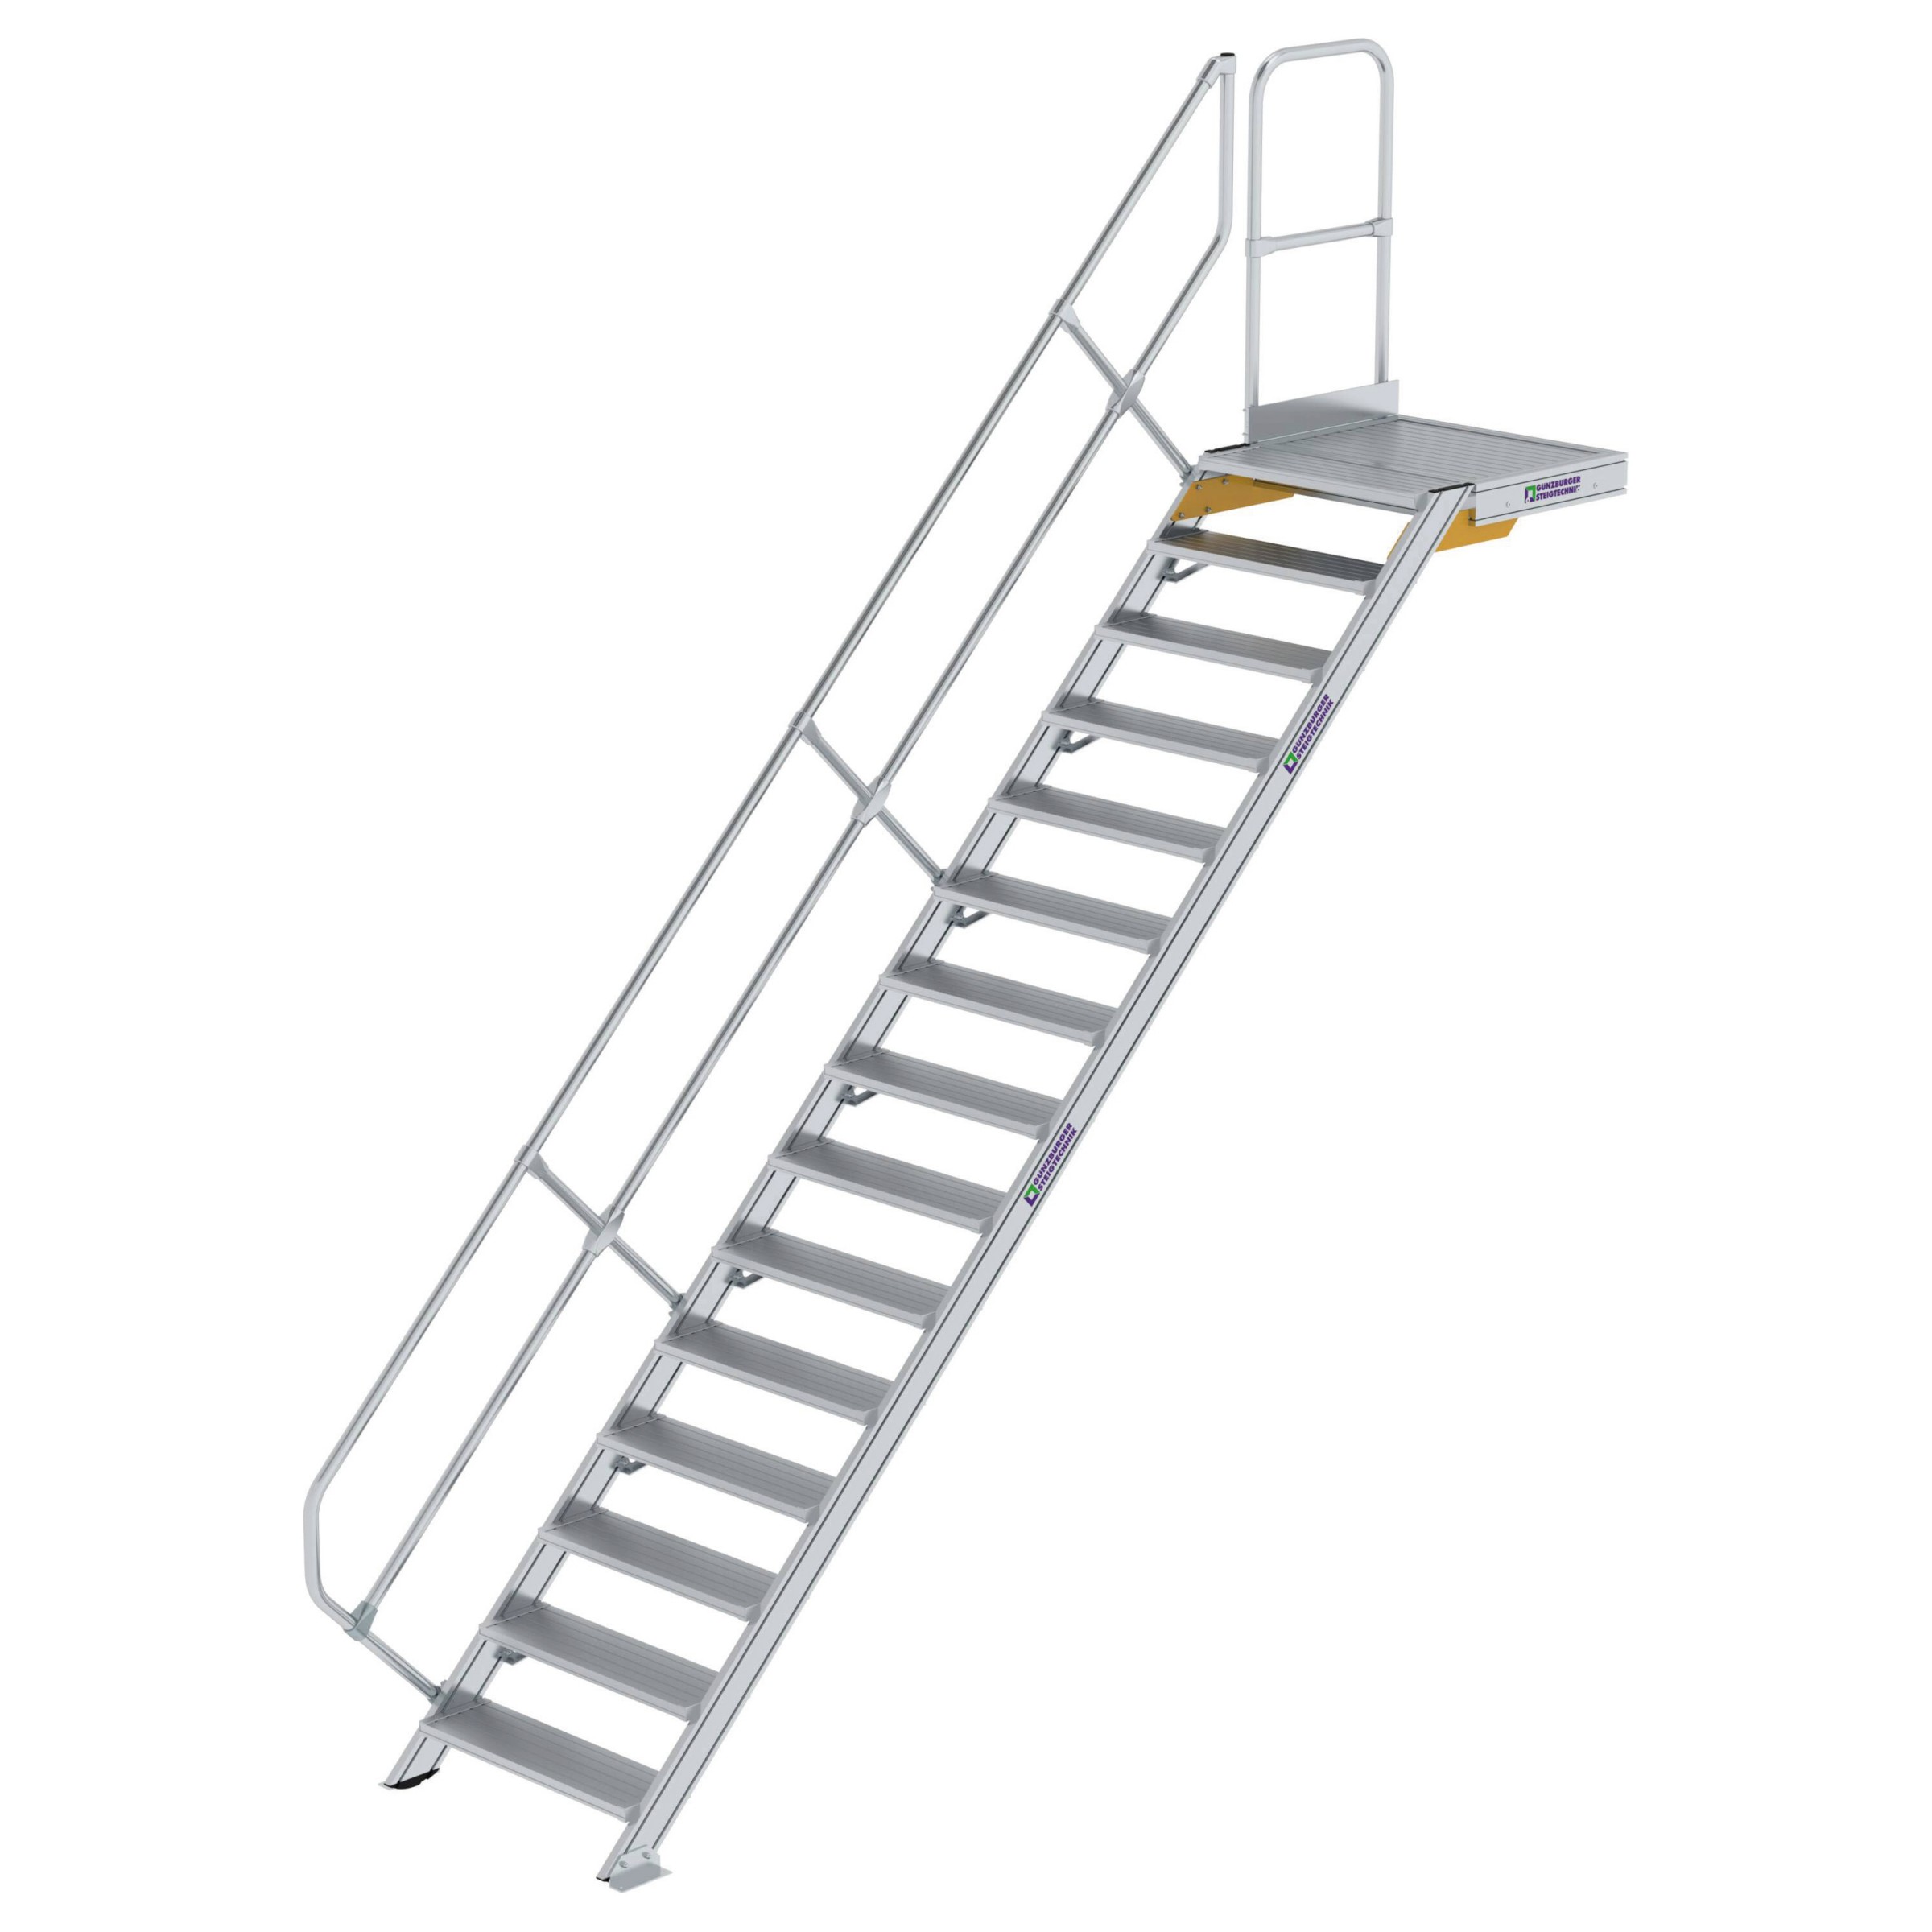 Aluminium-Treppe mit Plattform, 45°, Stufenbreite 800 mm, 4 Stufen